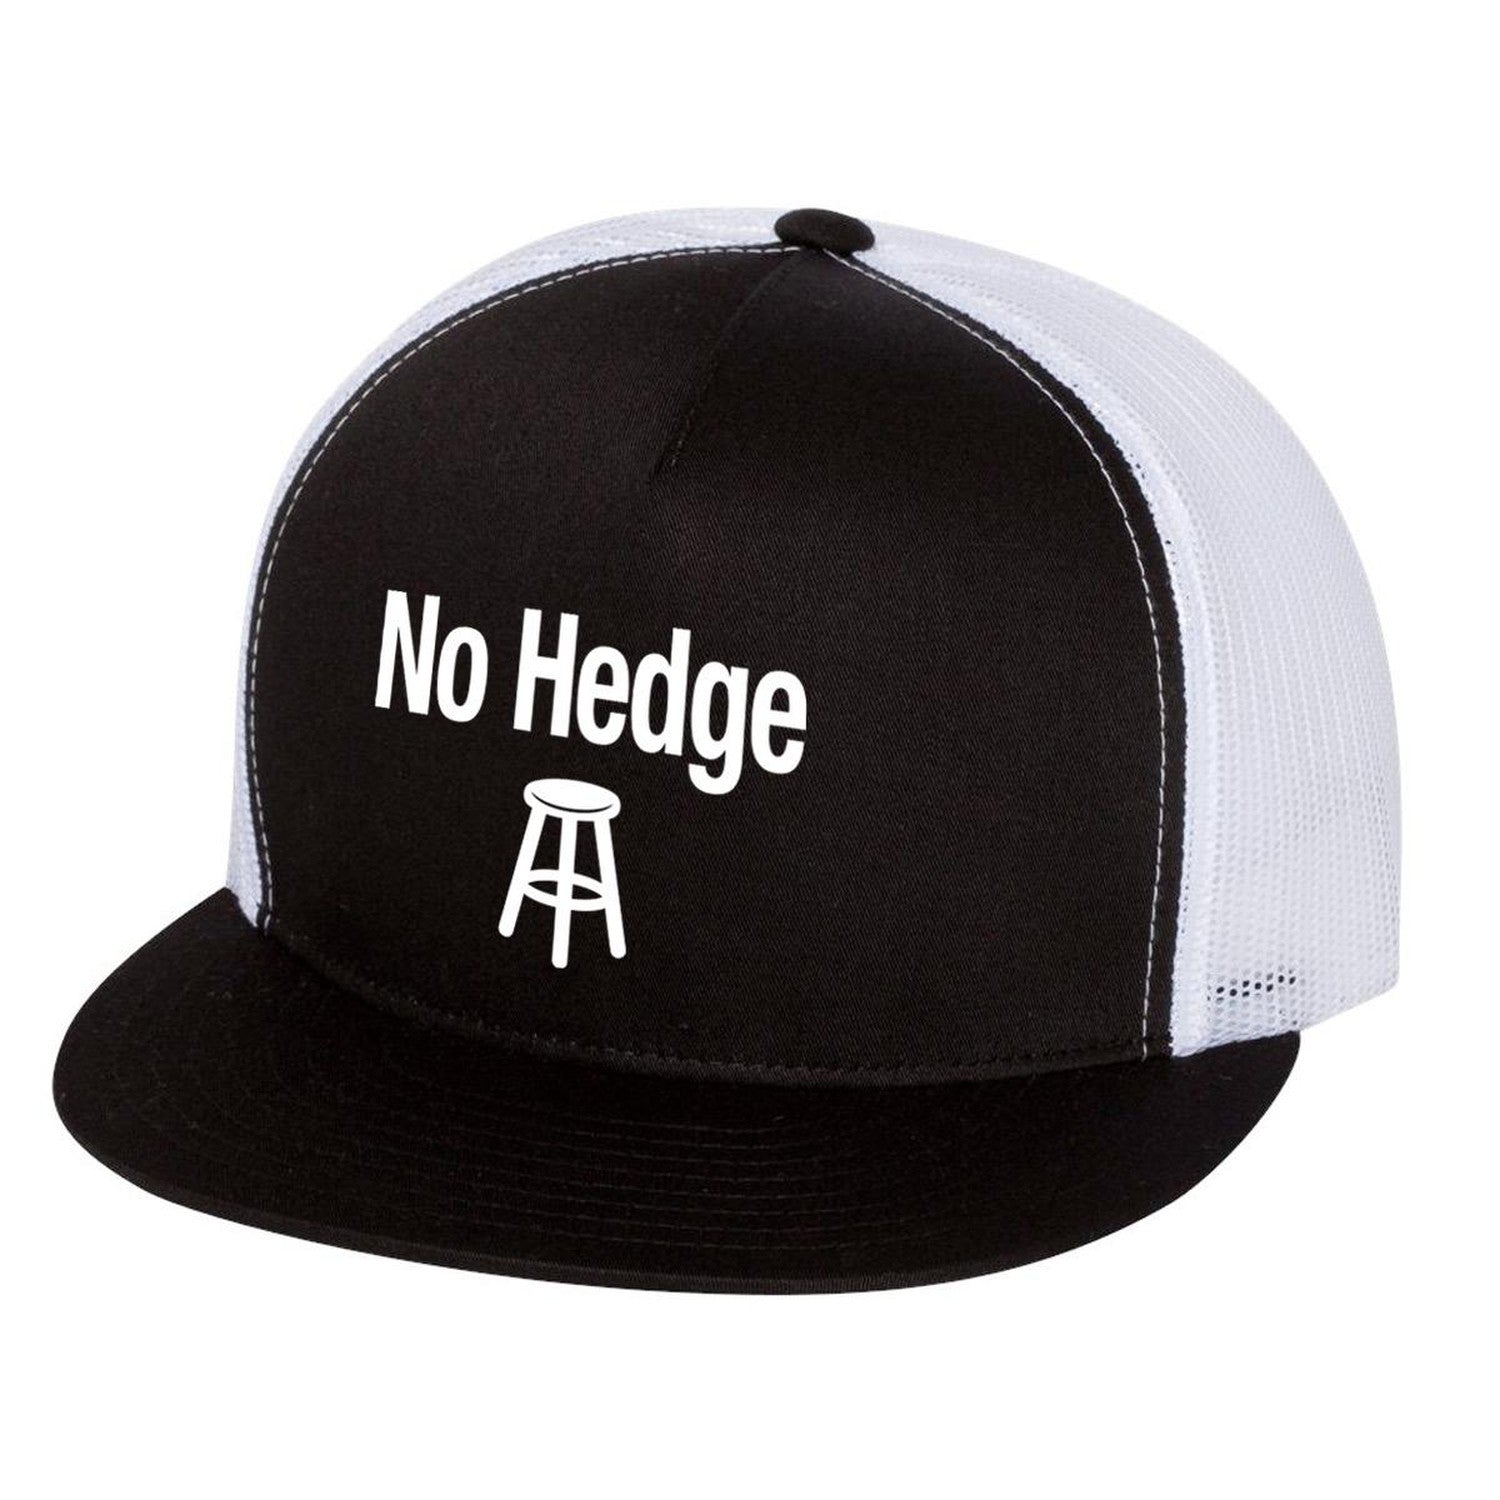 Mr. Ice No Hedge Trucker Hat